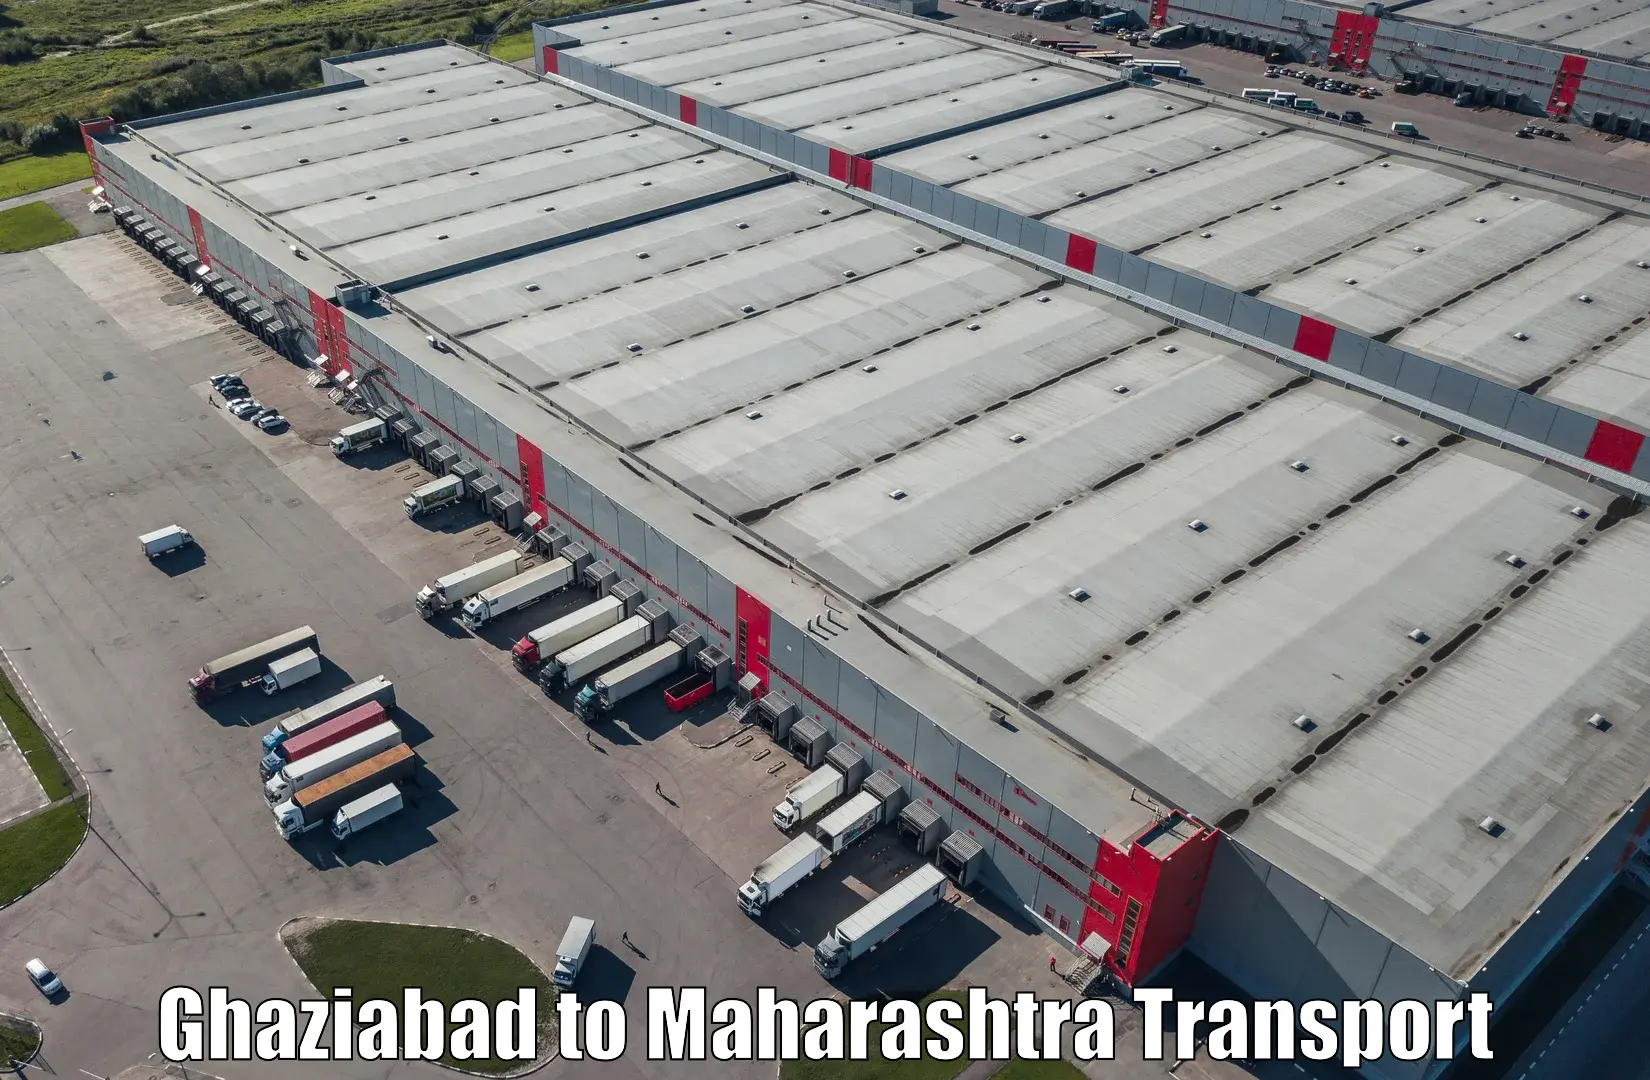 All India transport service in Ghaziabad to Walchandnagar